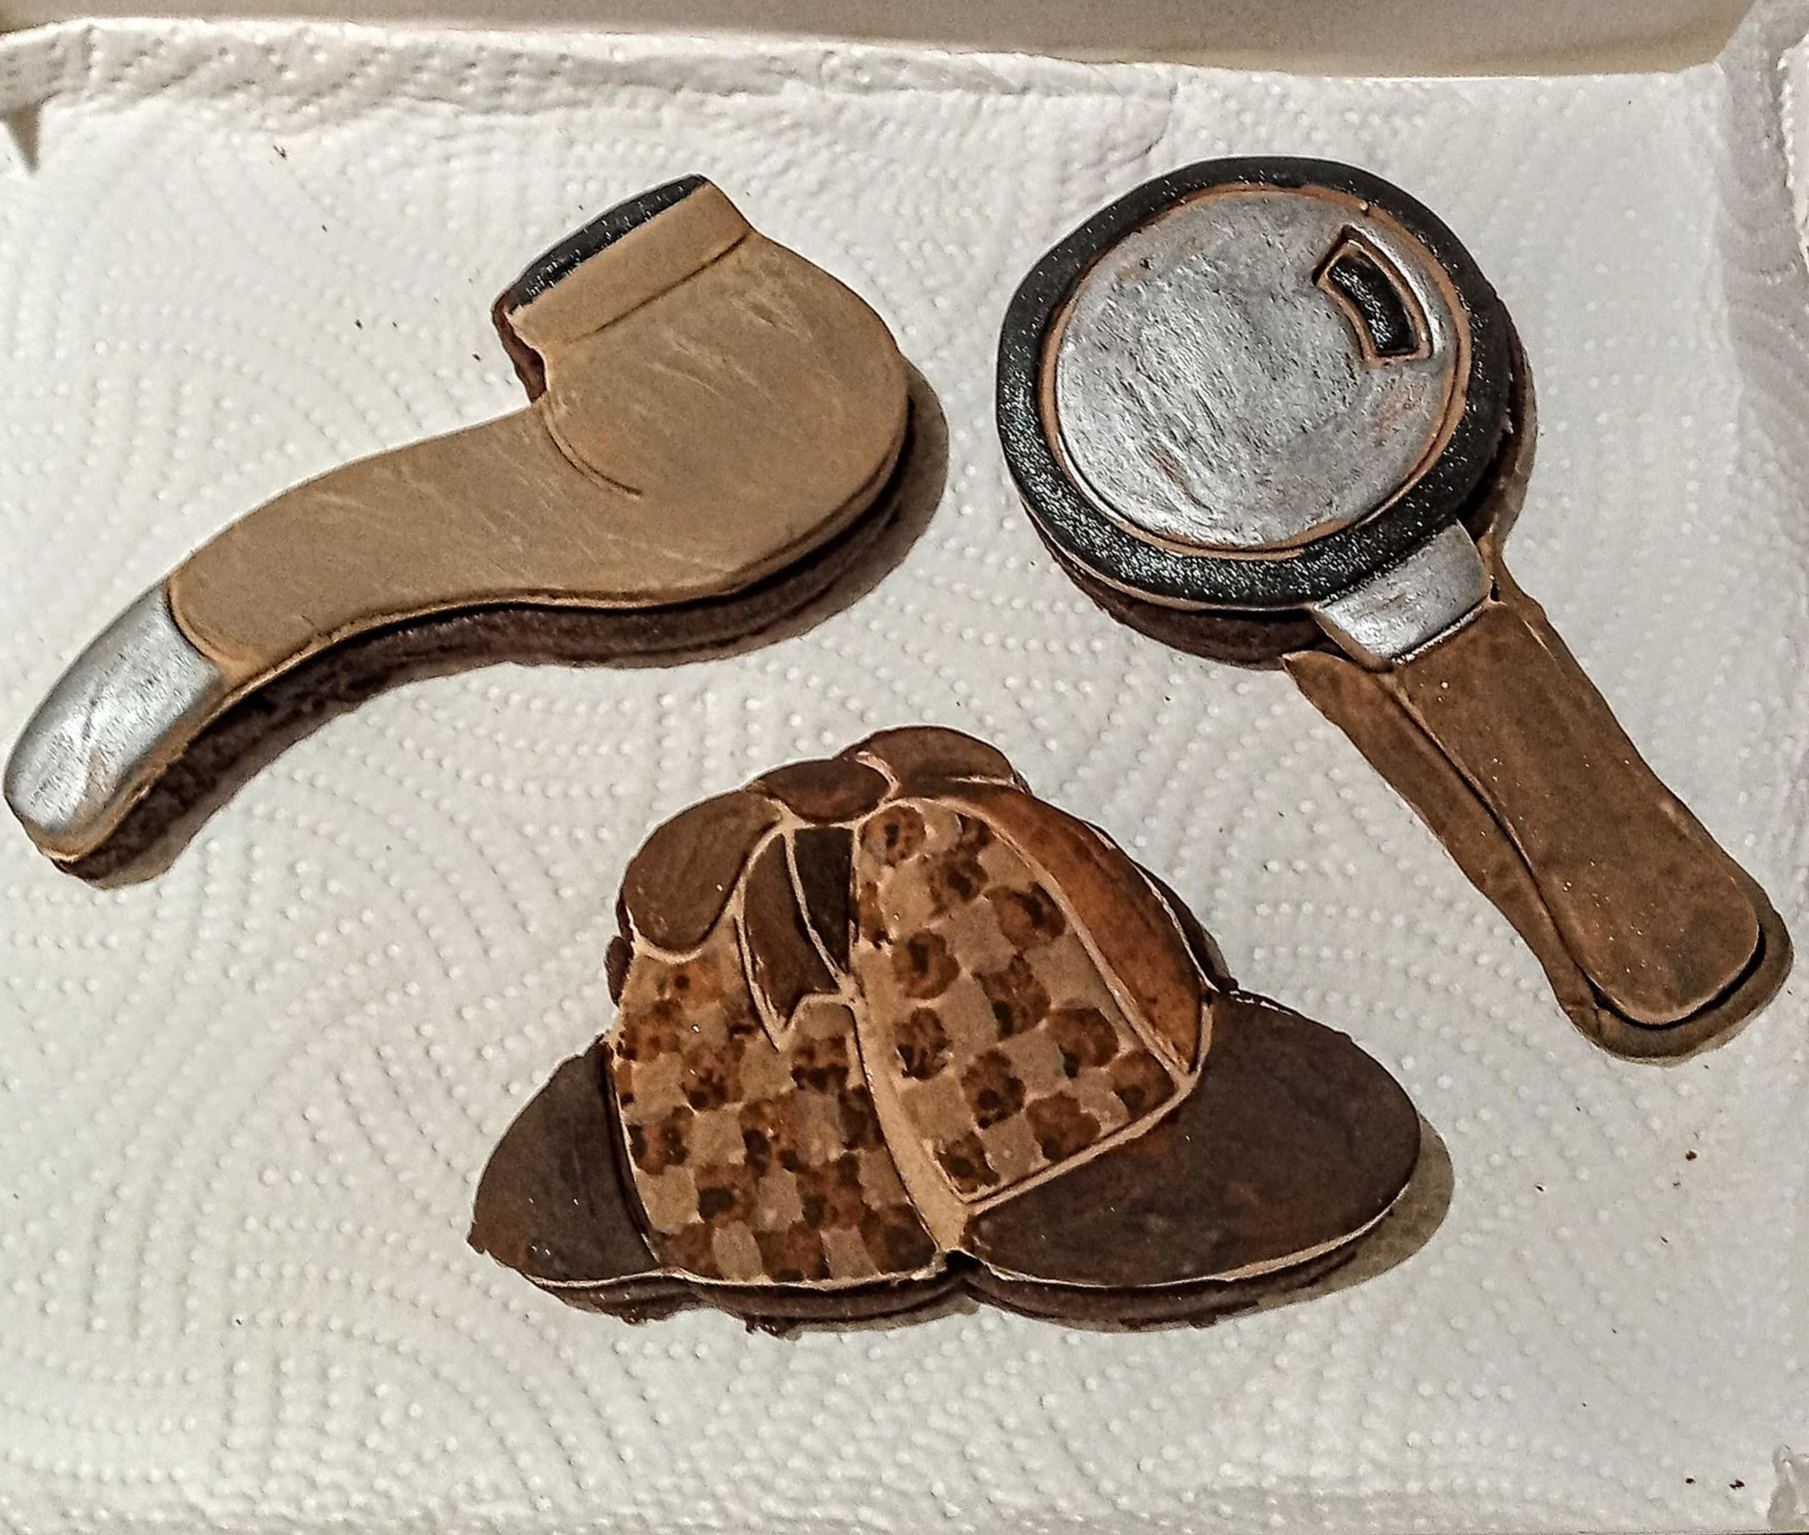 "Sherlock Holmes" inspired cookie set